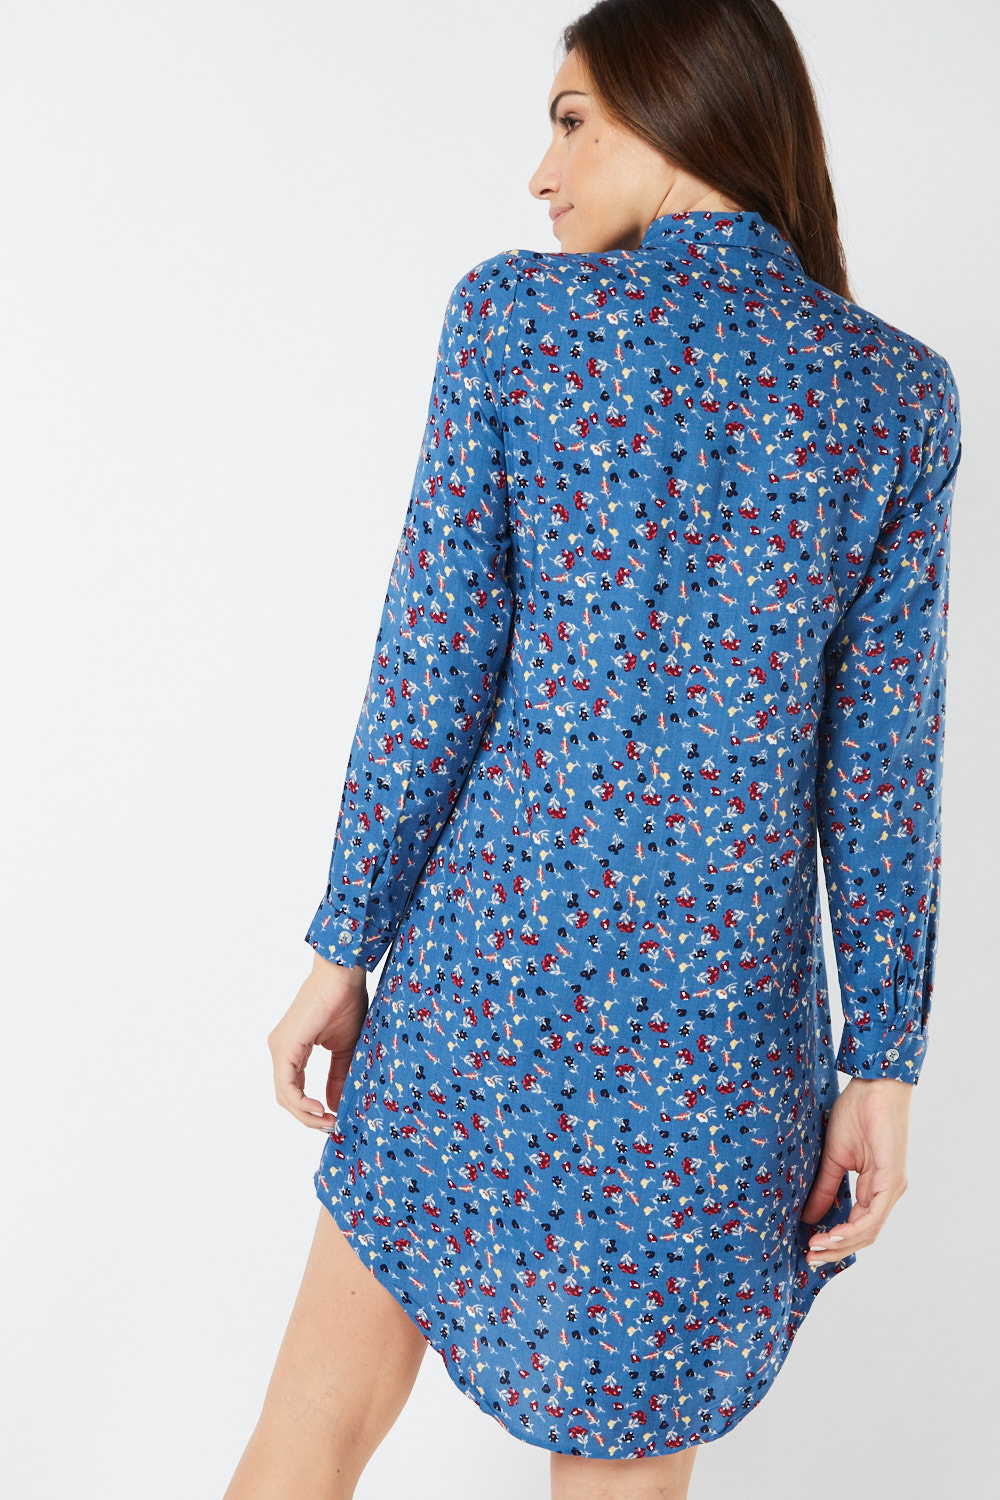 Ditsy Floral Print Shirt Dress - Just $7